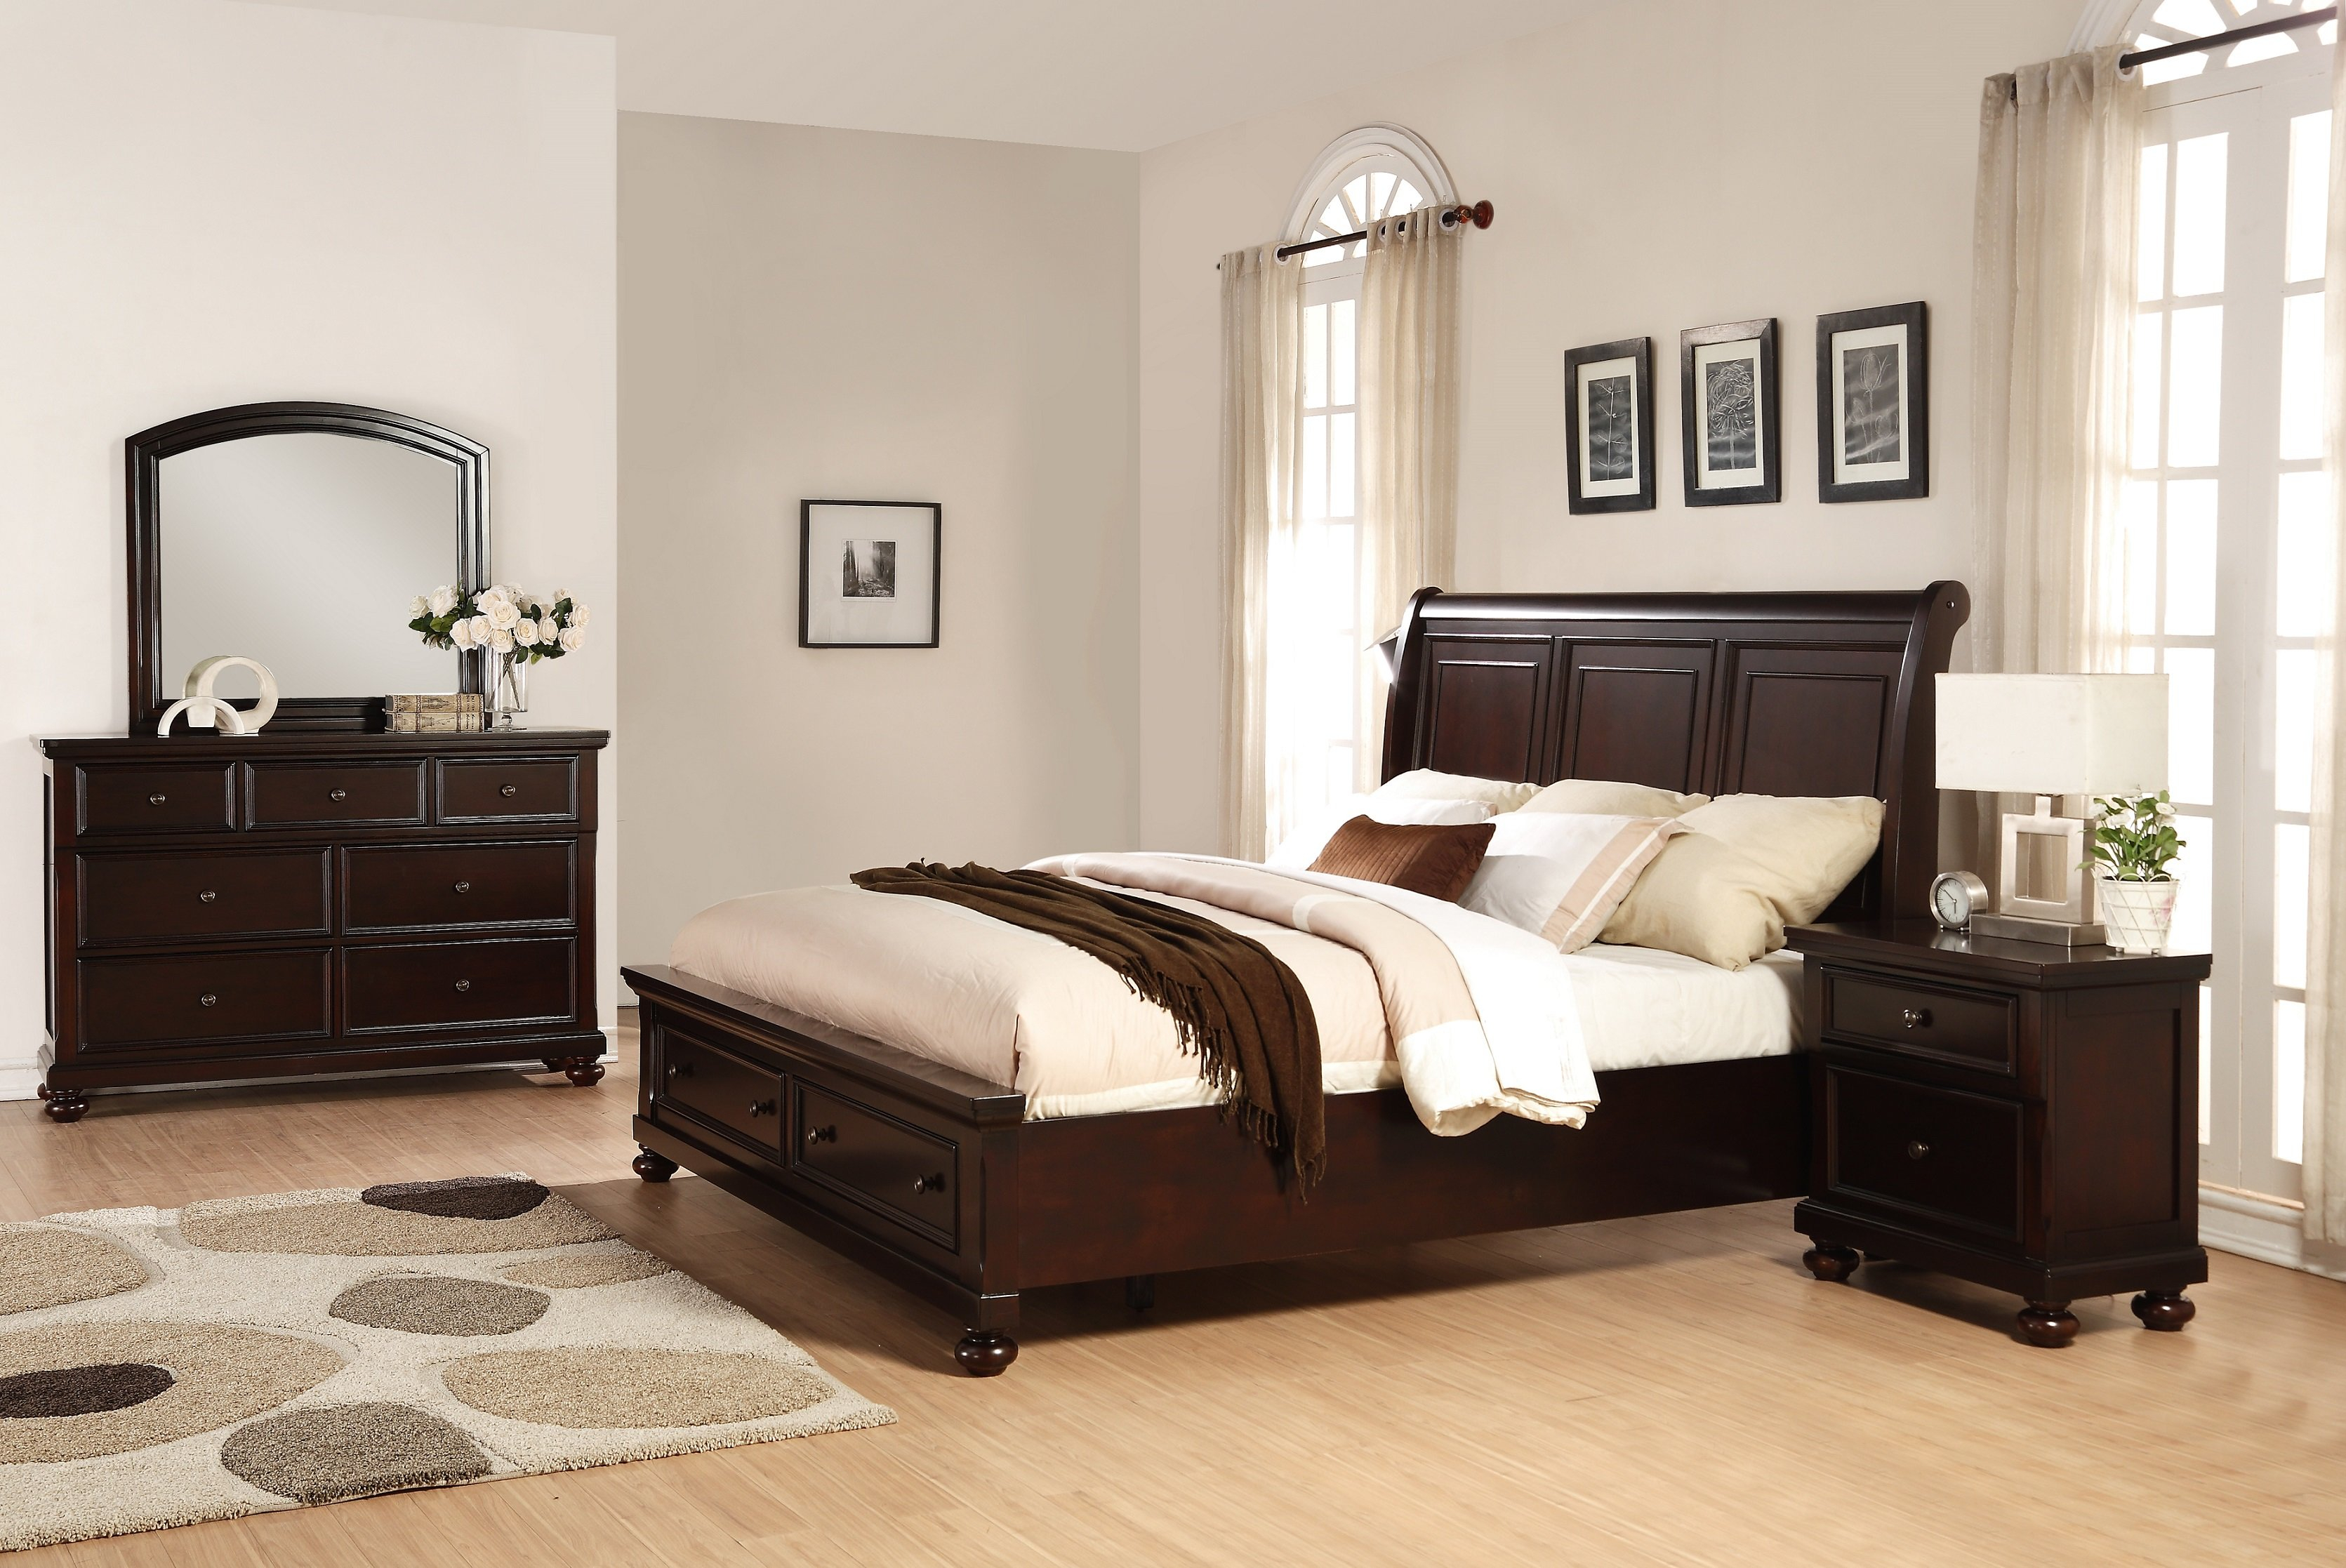 Jaimes King Platform Configurable Bedroom Set pertaining to dimensions 3342 X 2234